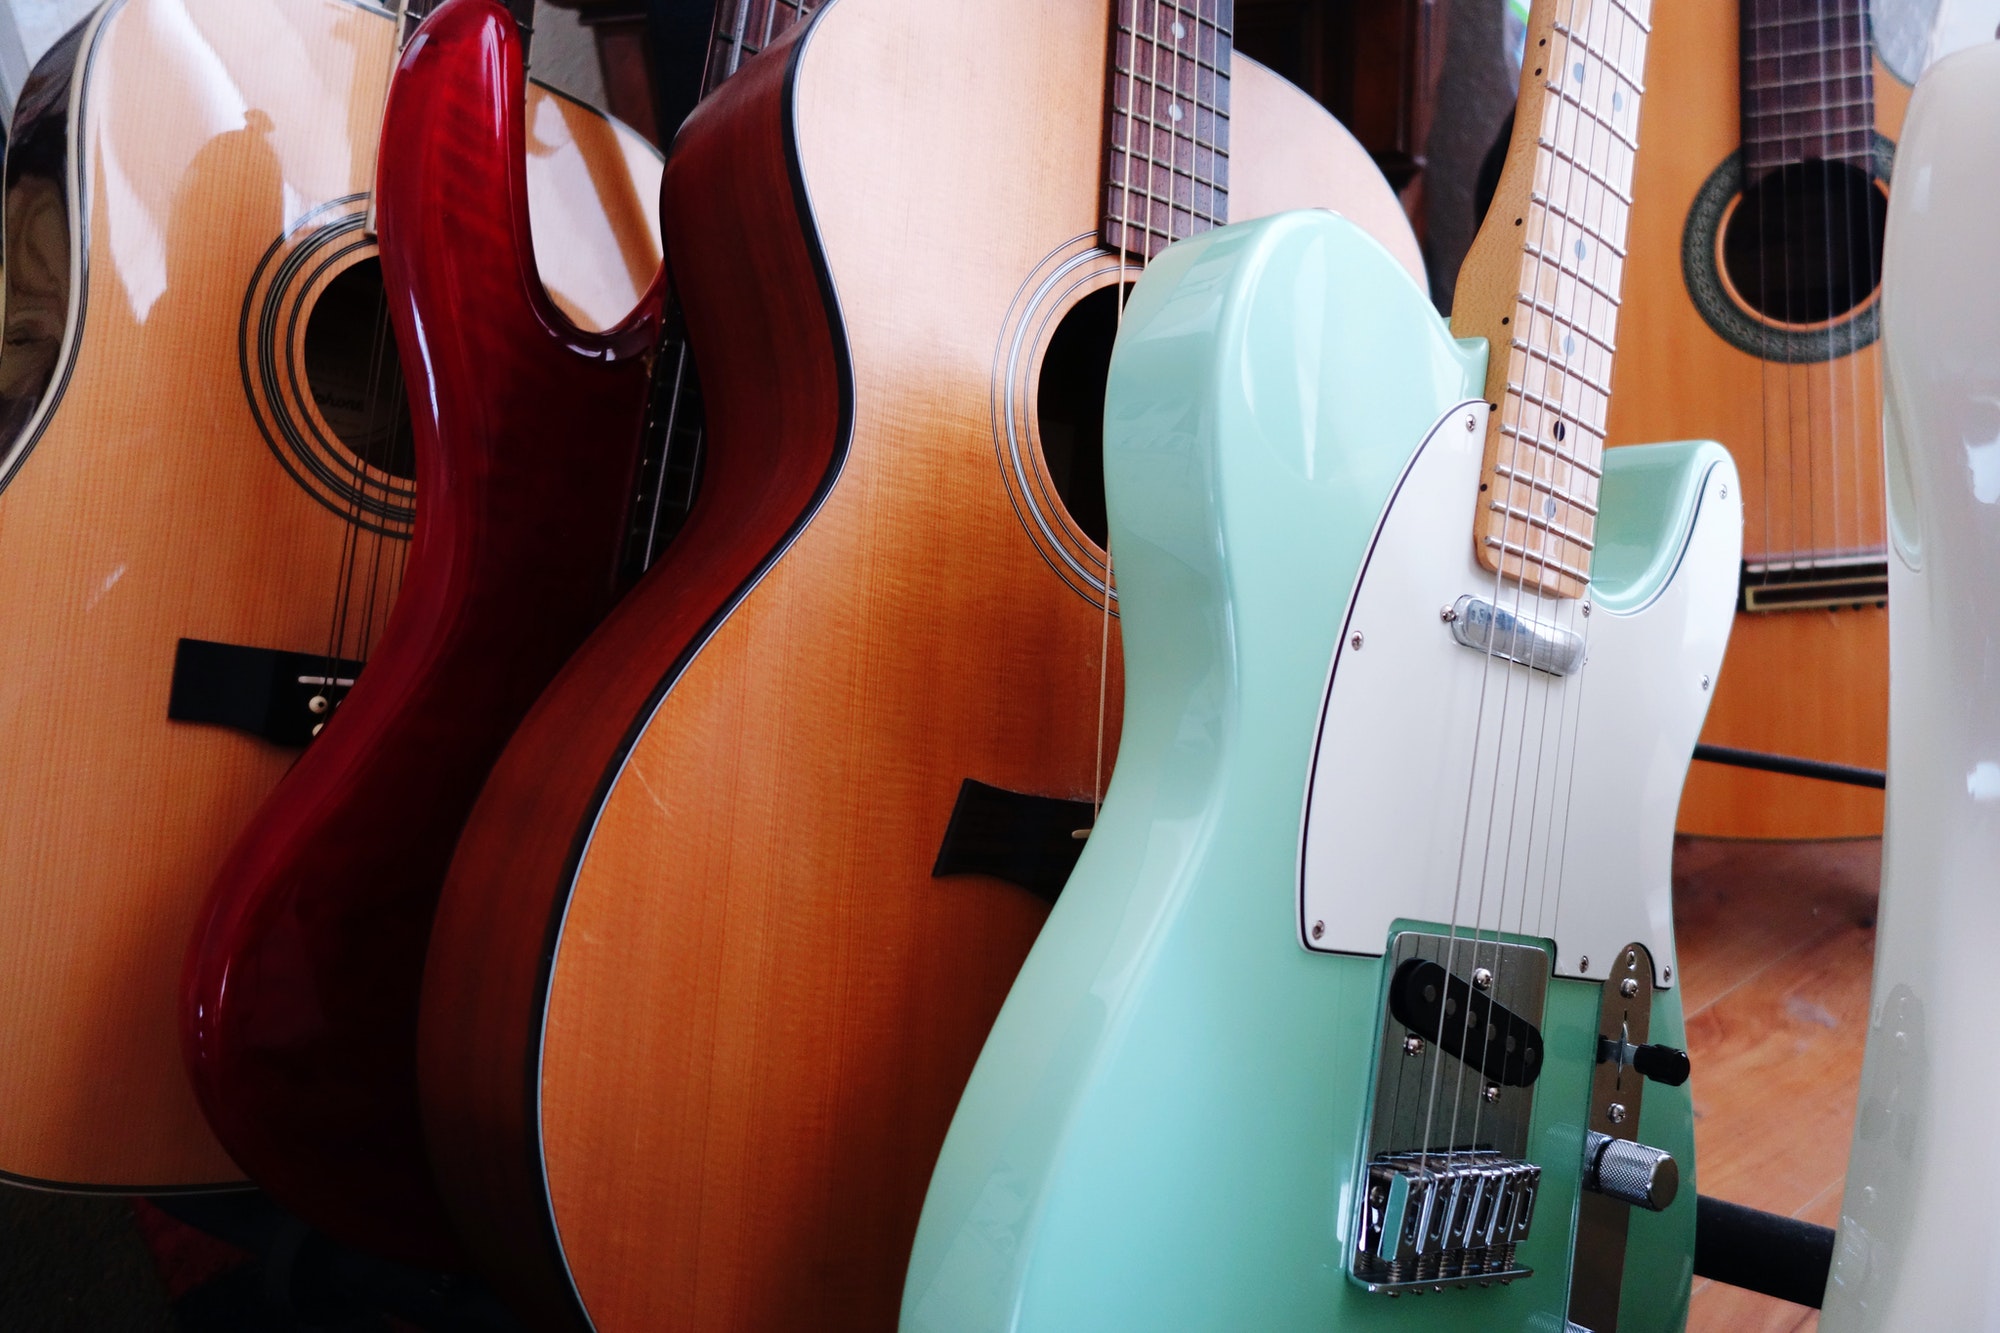 Guitars On A Guitar Rack Indoors